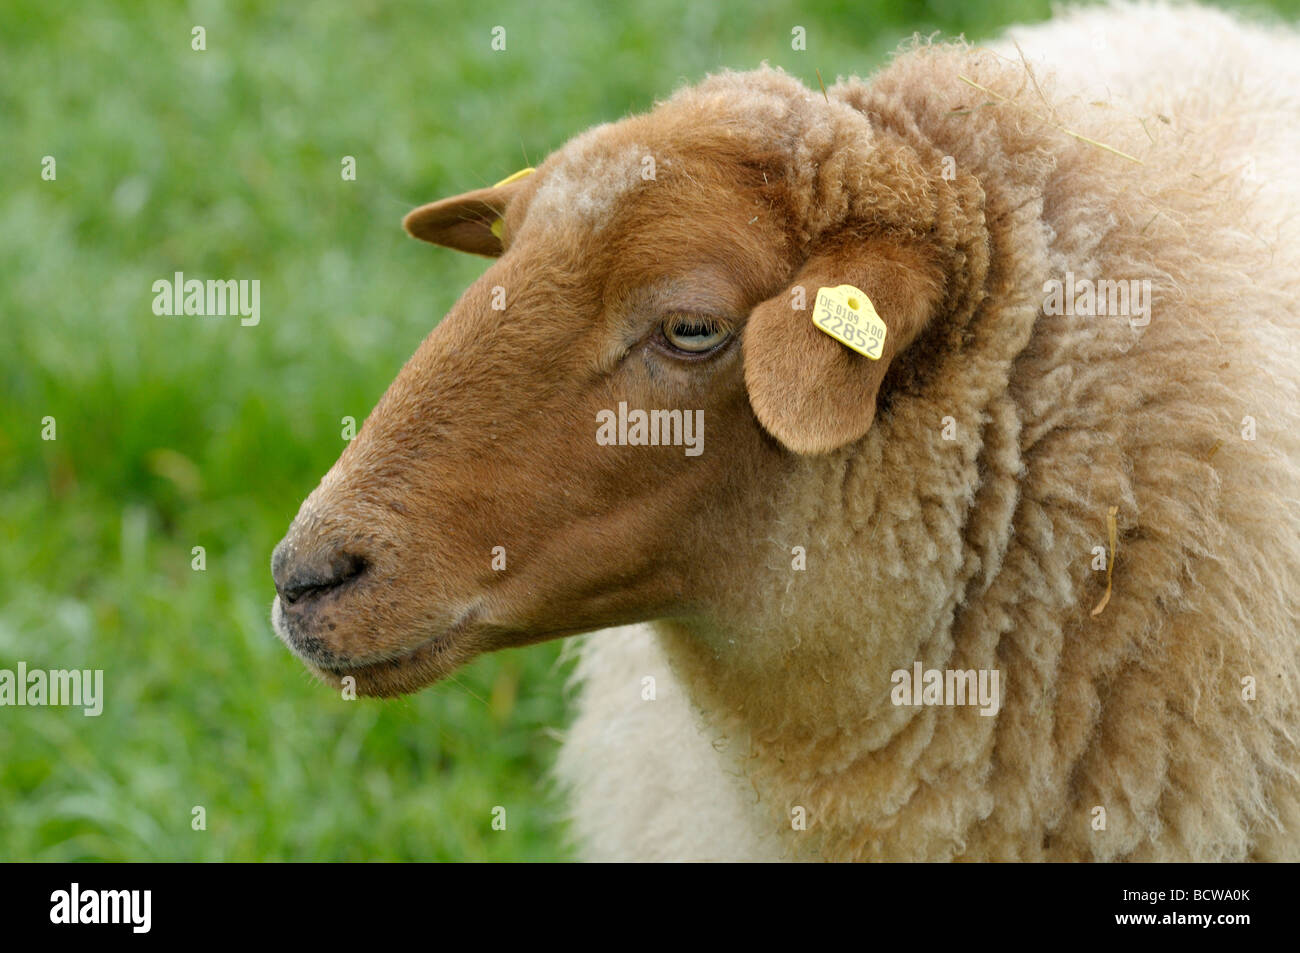 Domestic Sheep, Coburg Fox Sheep (Ovis orientalis aries, Ovis ammon aries), portrait Stock Photo